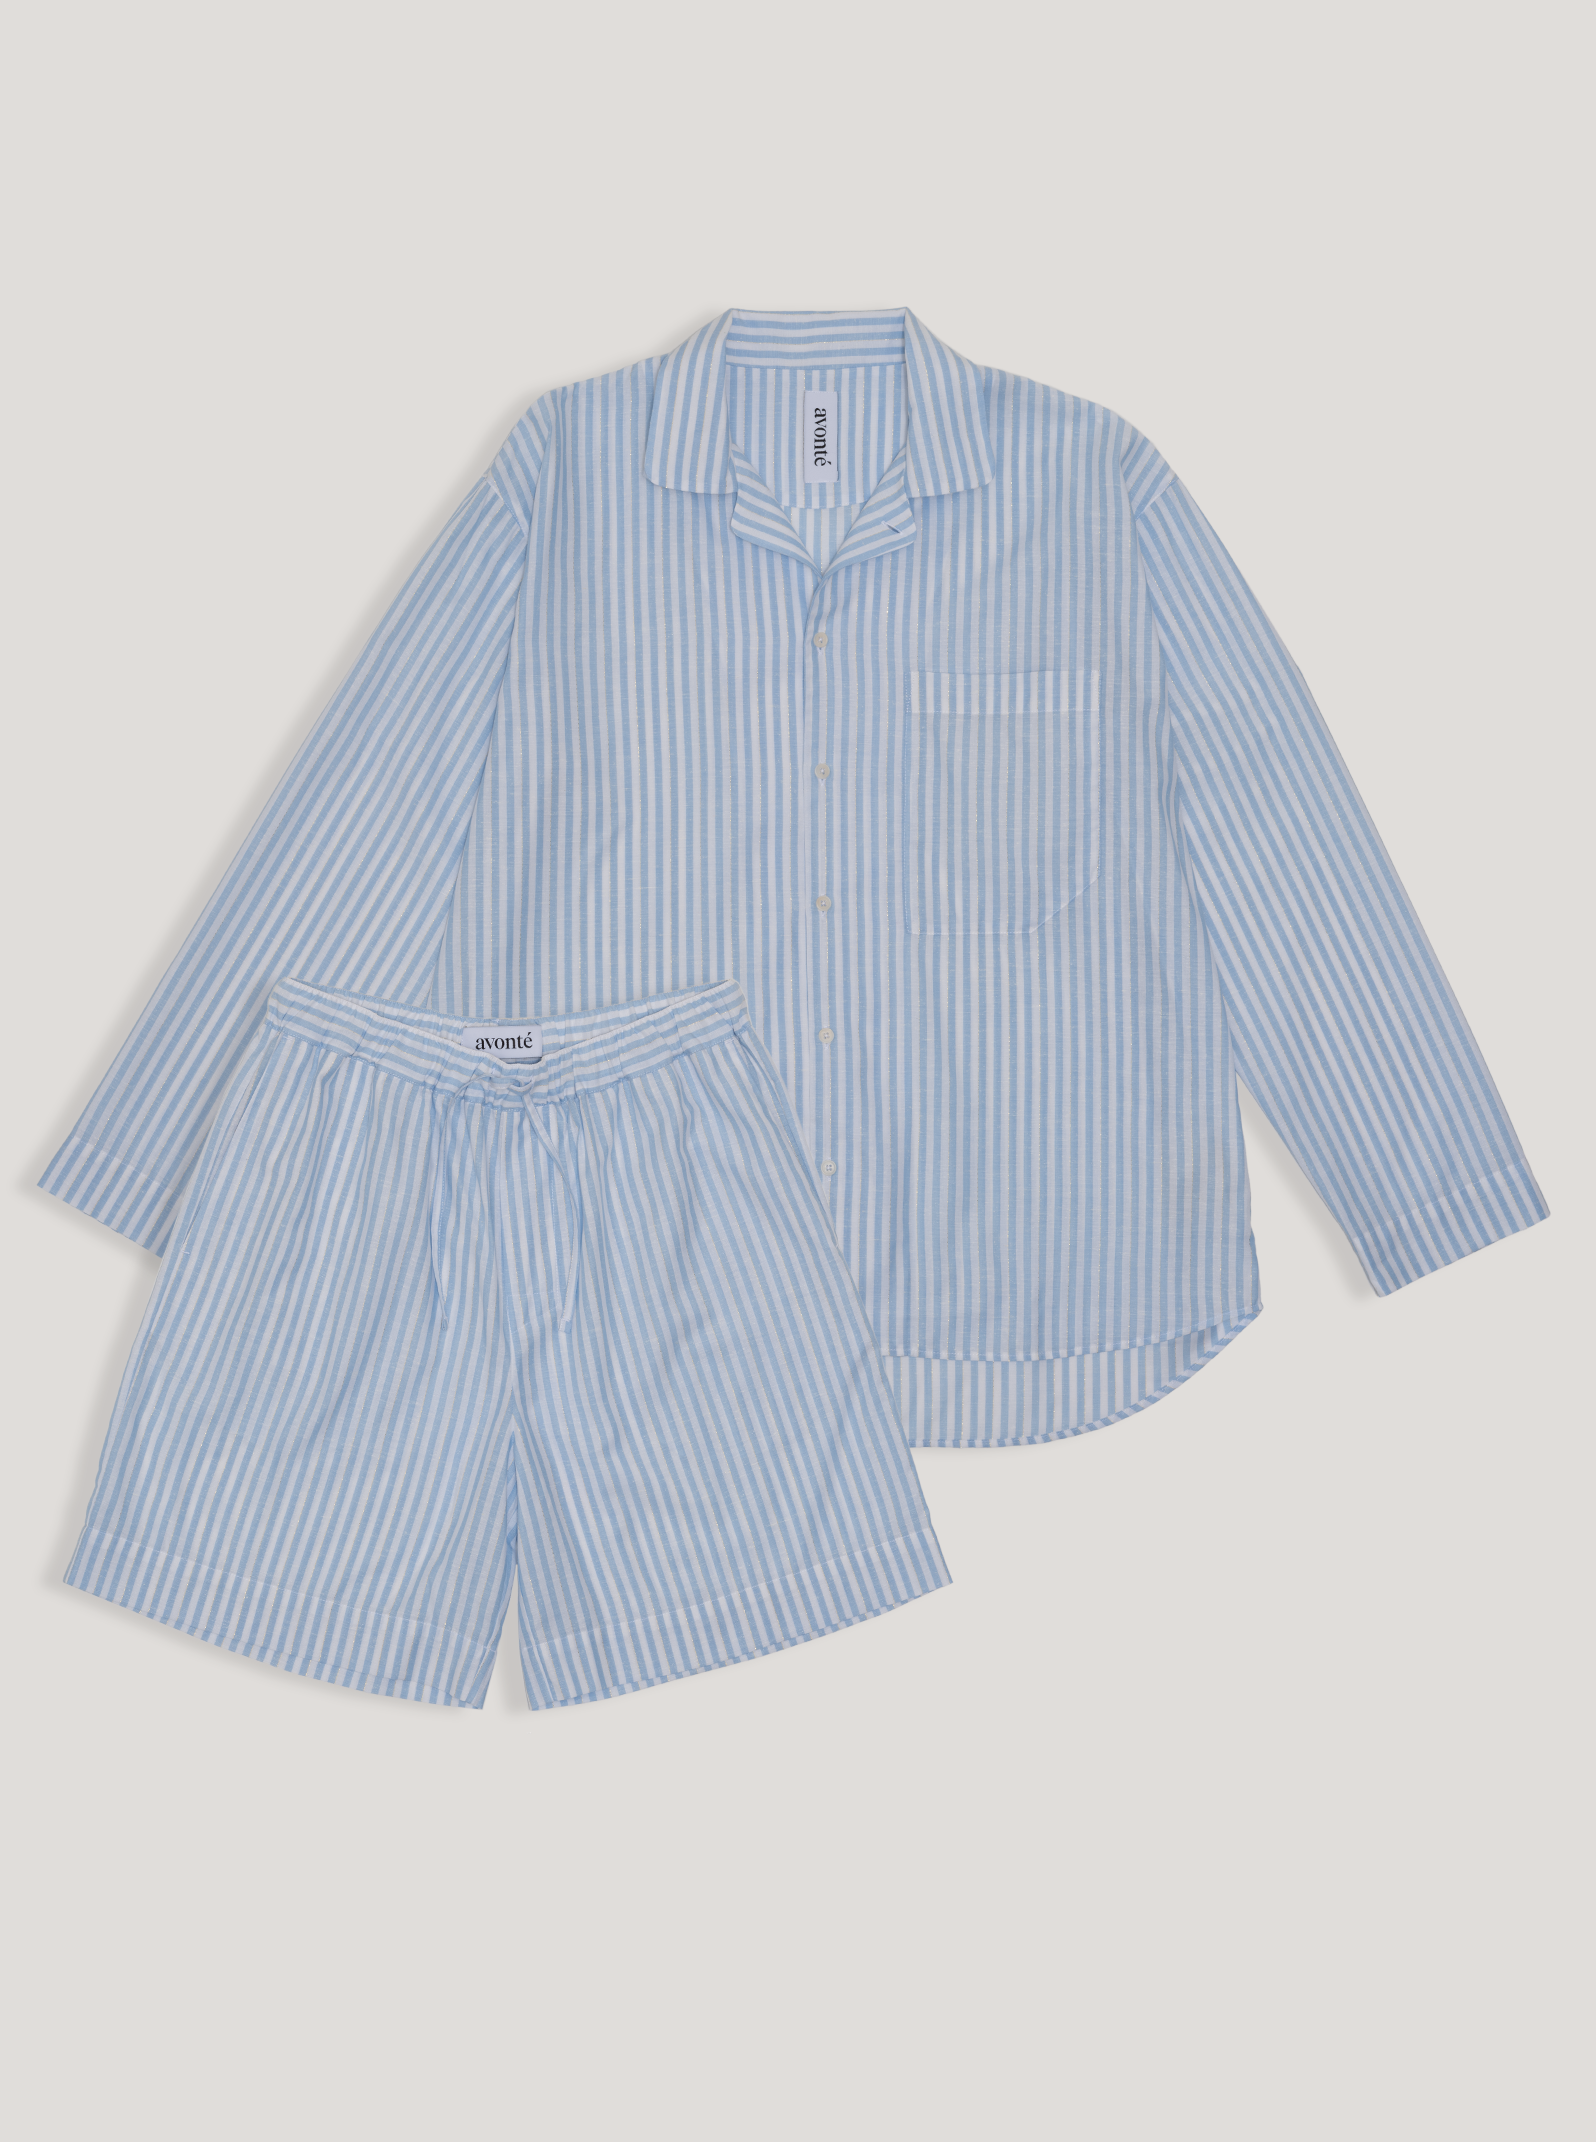 Pyjamaset (Hemd + Shorts) - golden clouds stripe